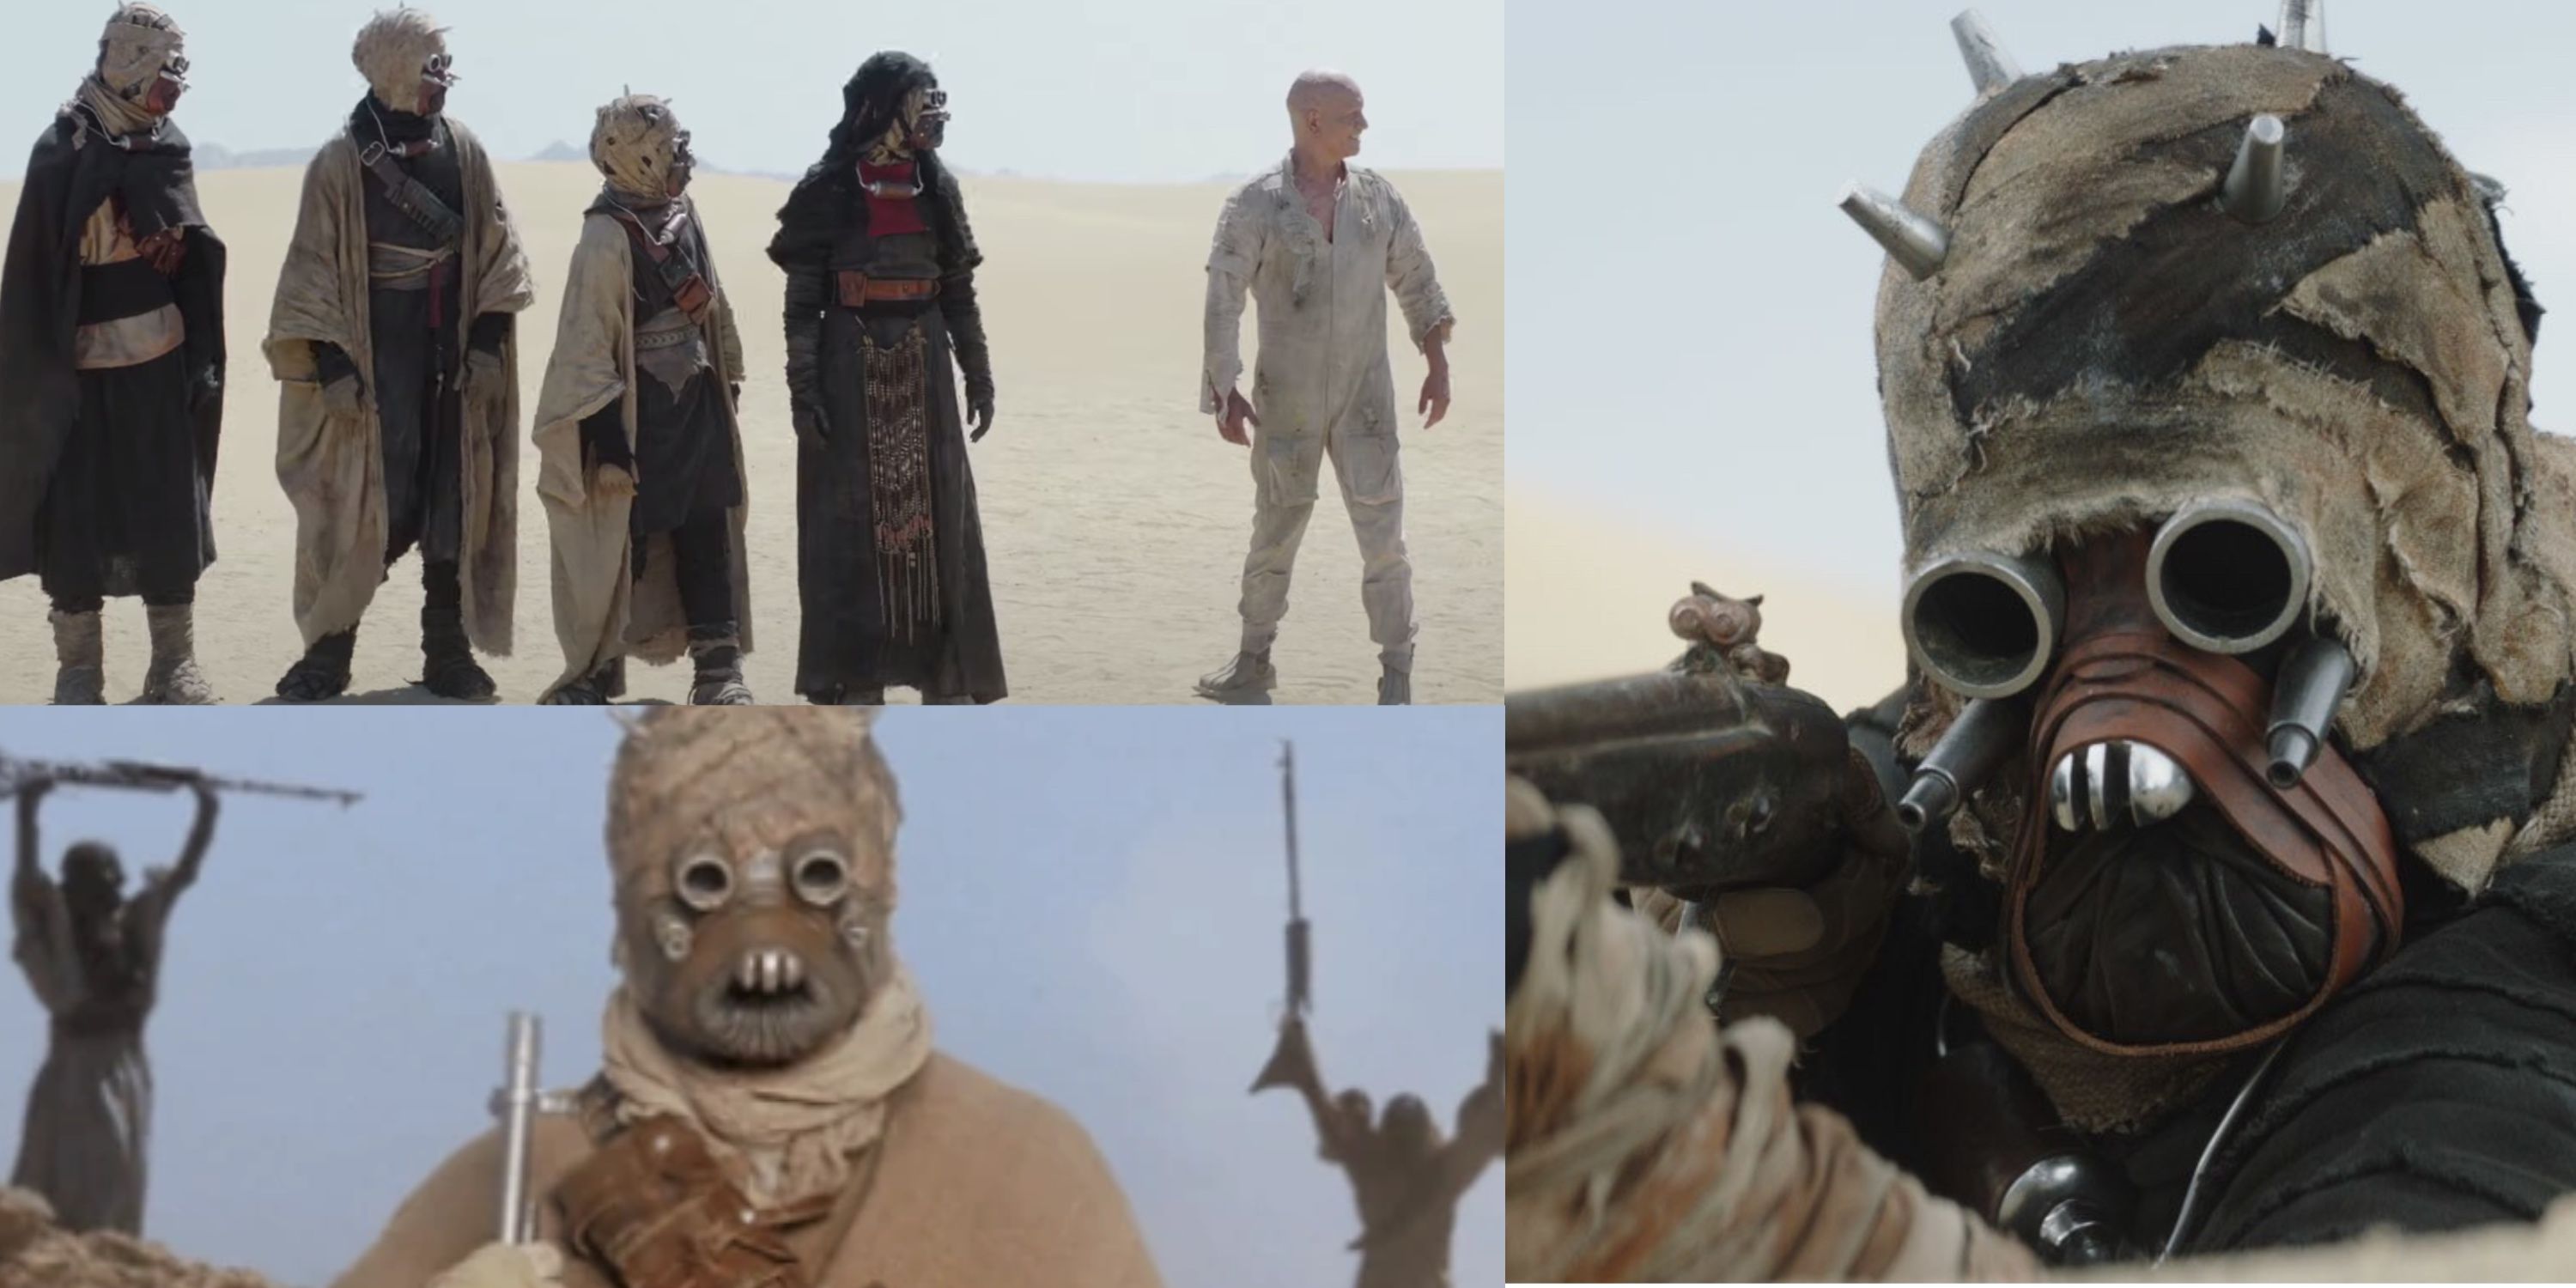 Various shots of the Tusken Raiders/ Sand People